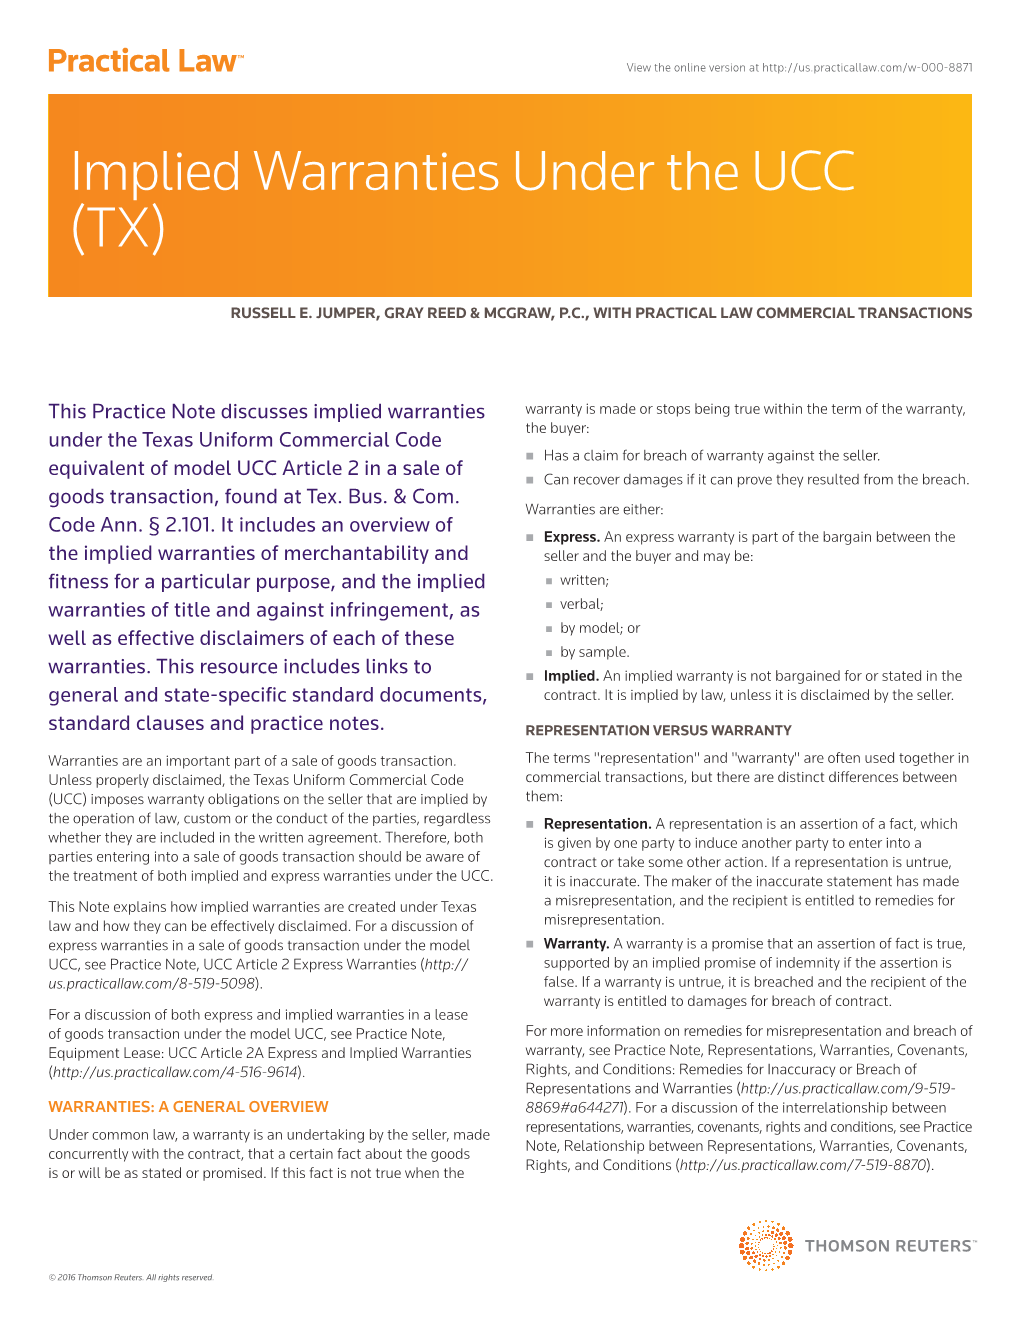 Implied Warranties Under the UCC (TX)